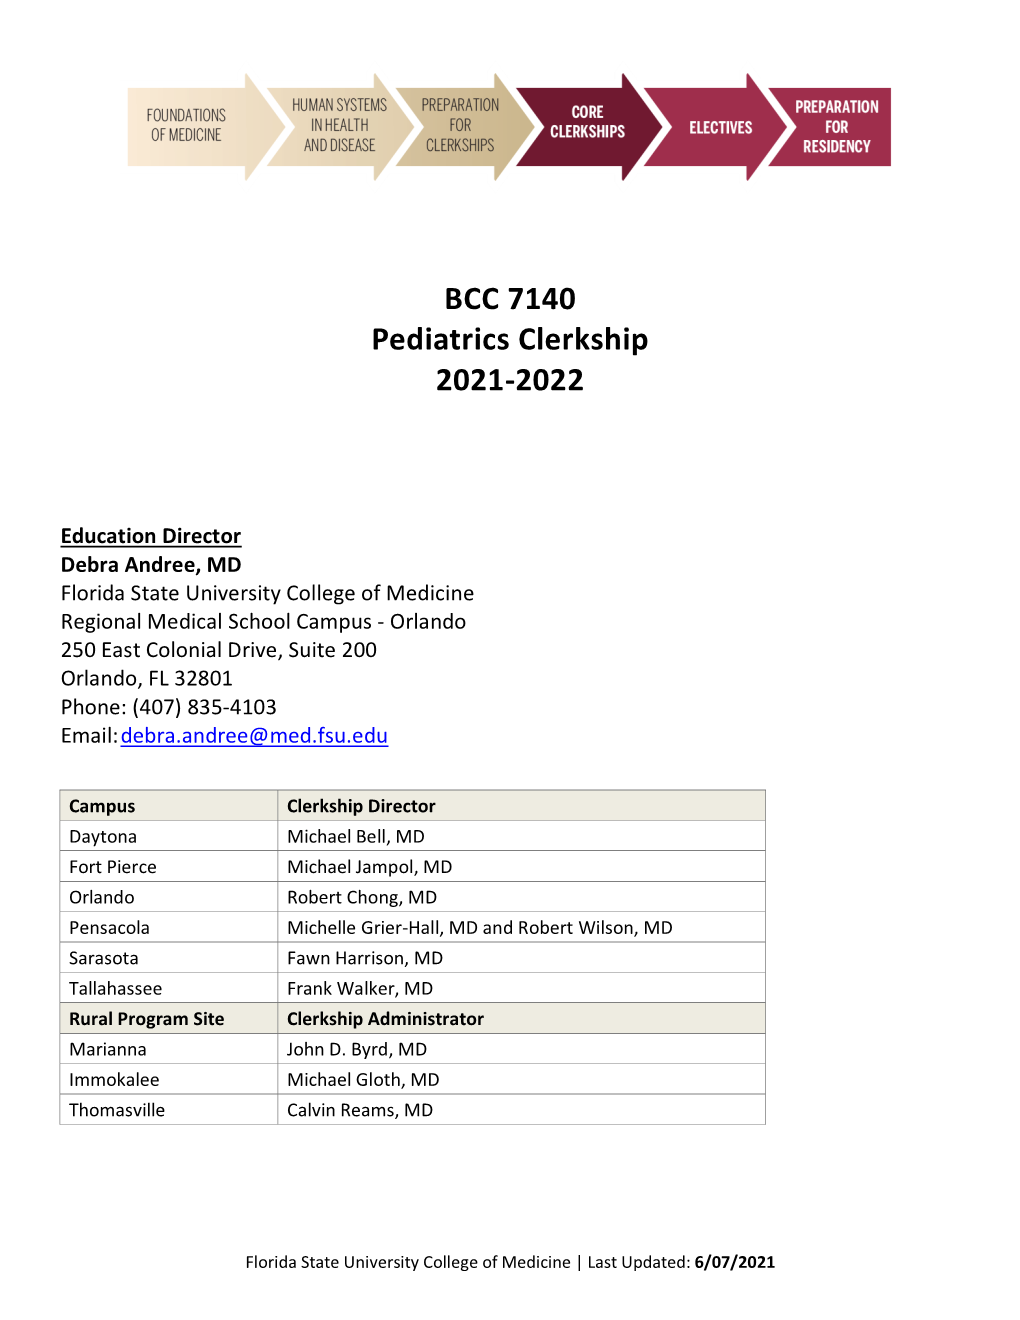 BCC 7140 Pediatrics Clerkship 2021-2022